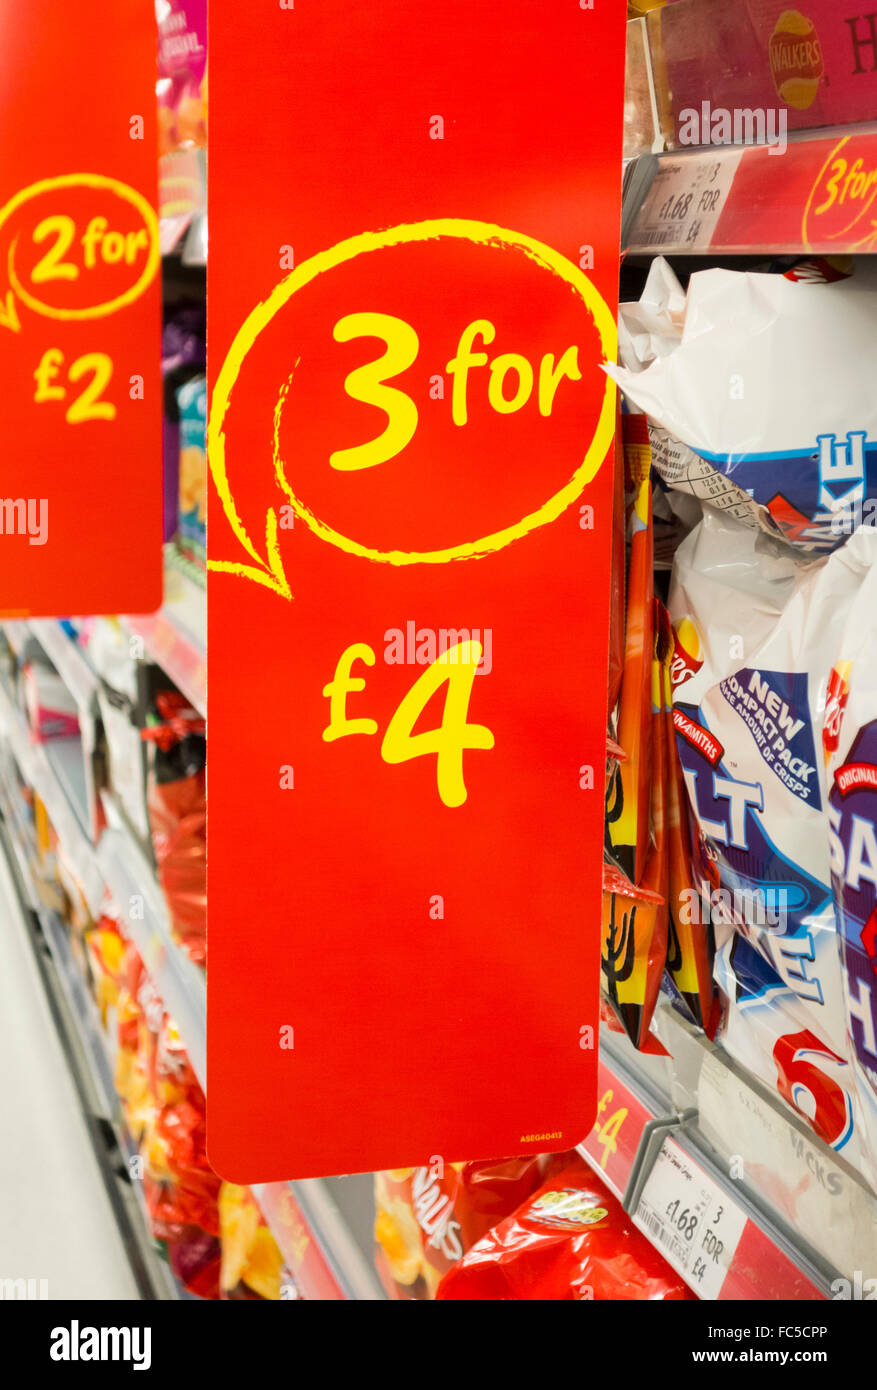 3 for £4 offer on large bags of crisps in Asda supermarket. UK Stock Photo